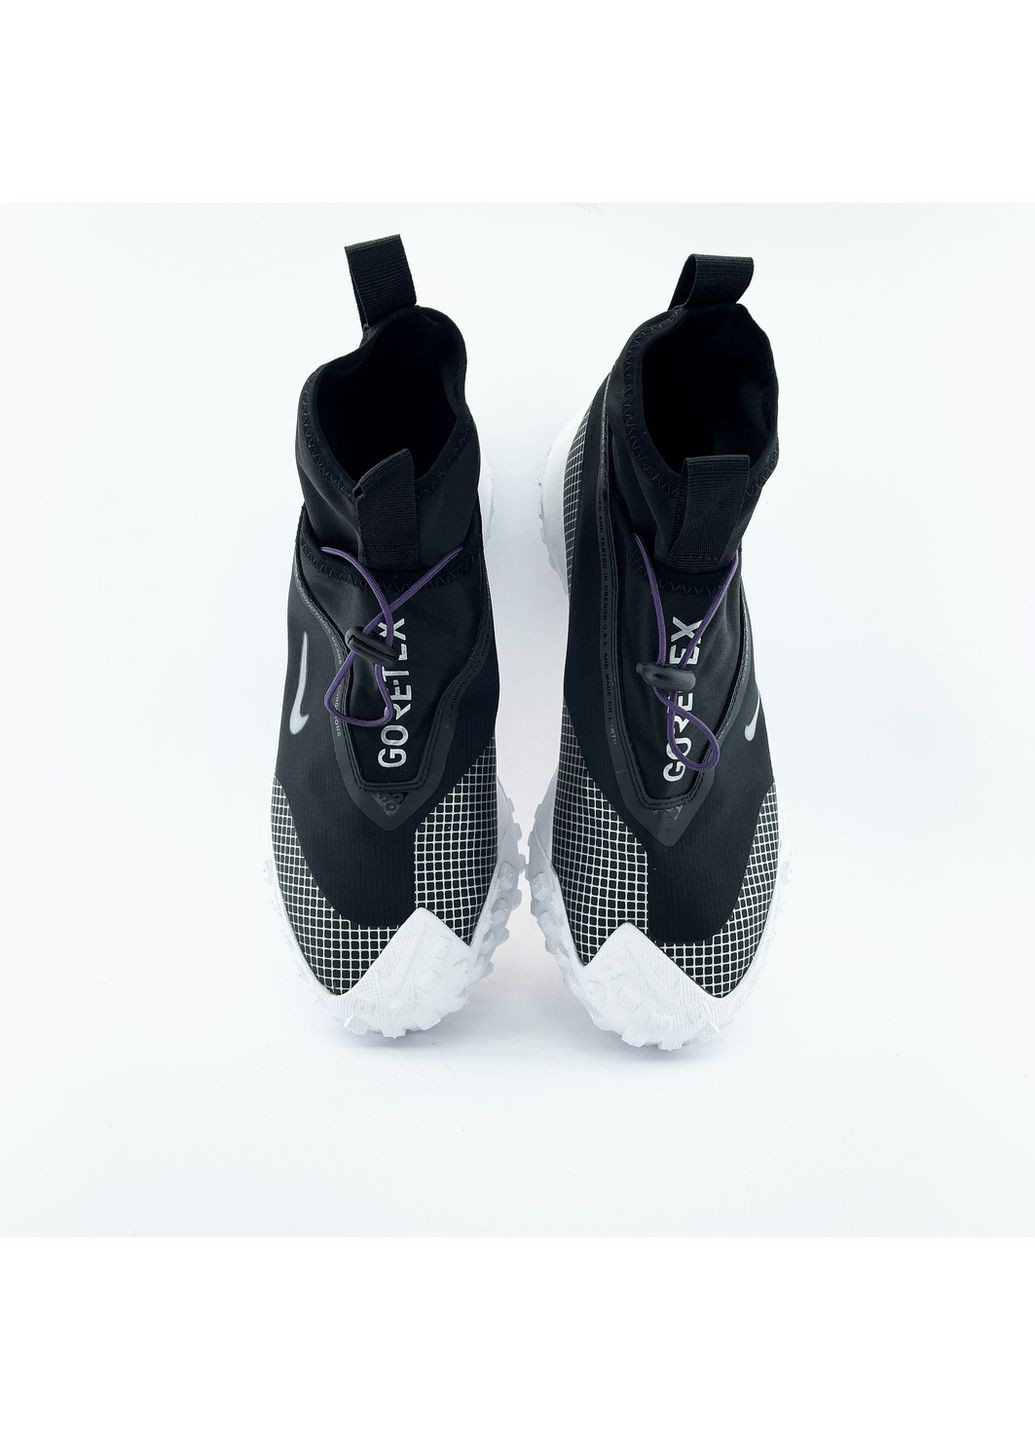 Цветные демисезонные кроссовки мужские fly gore-tex "black/white", вьетнам Nike ACG Mountain